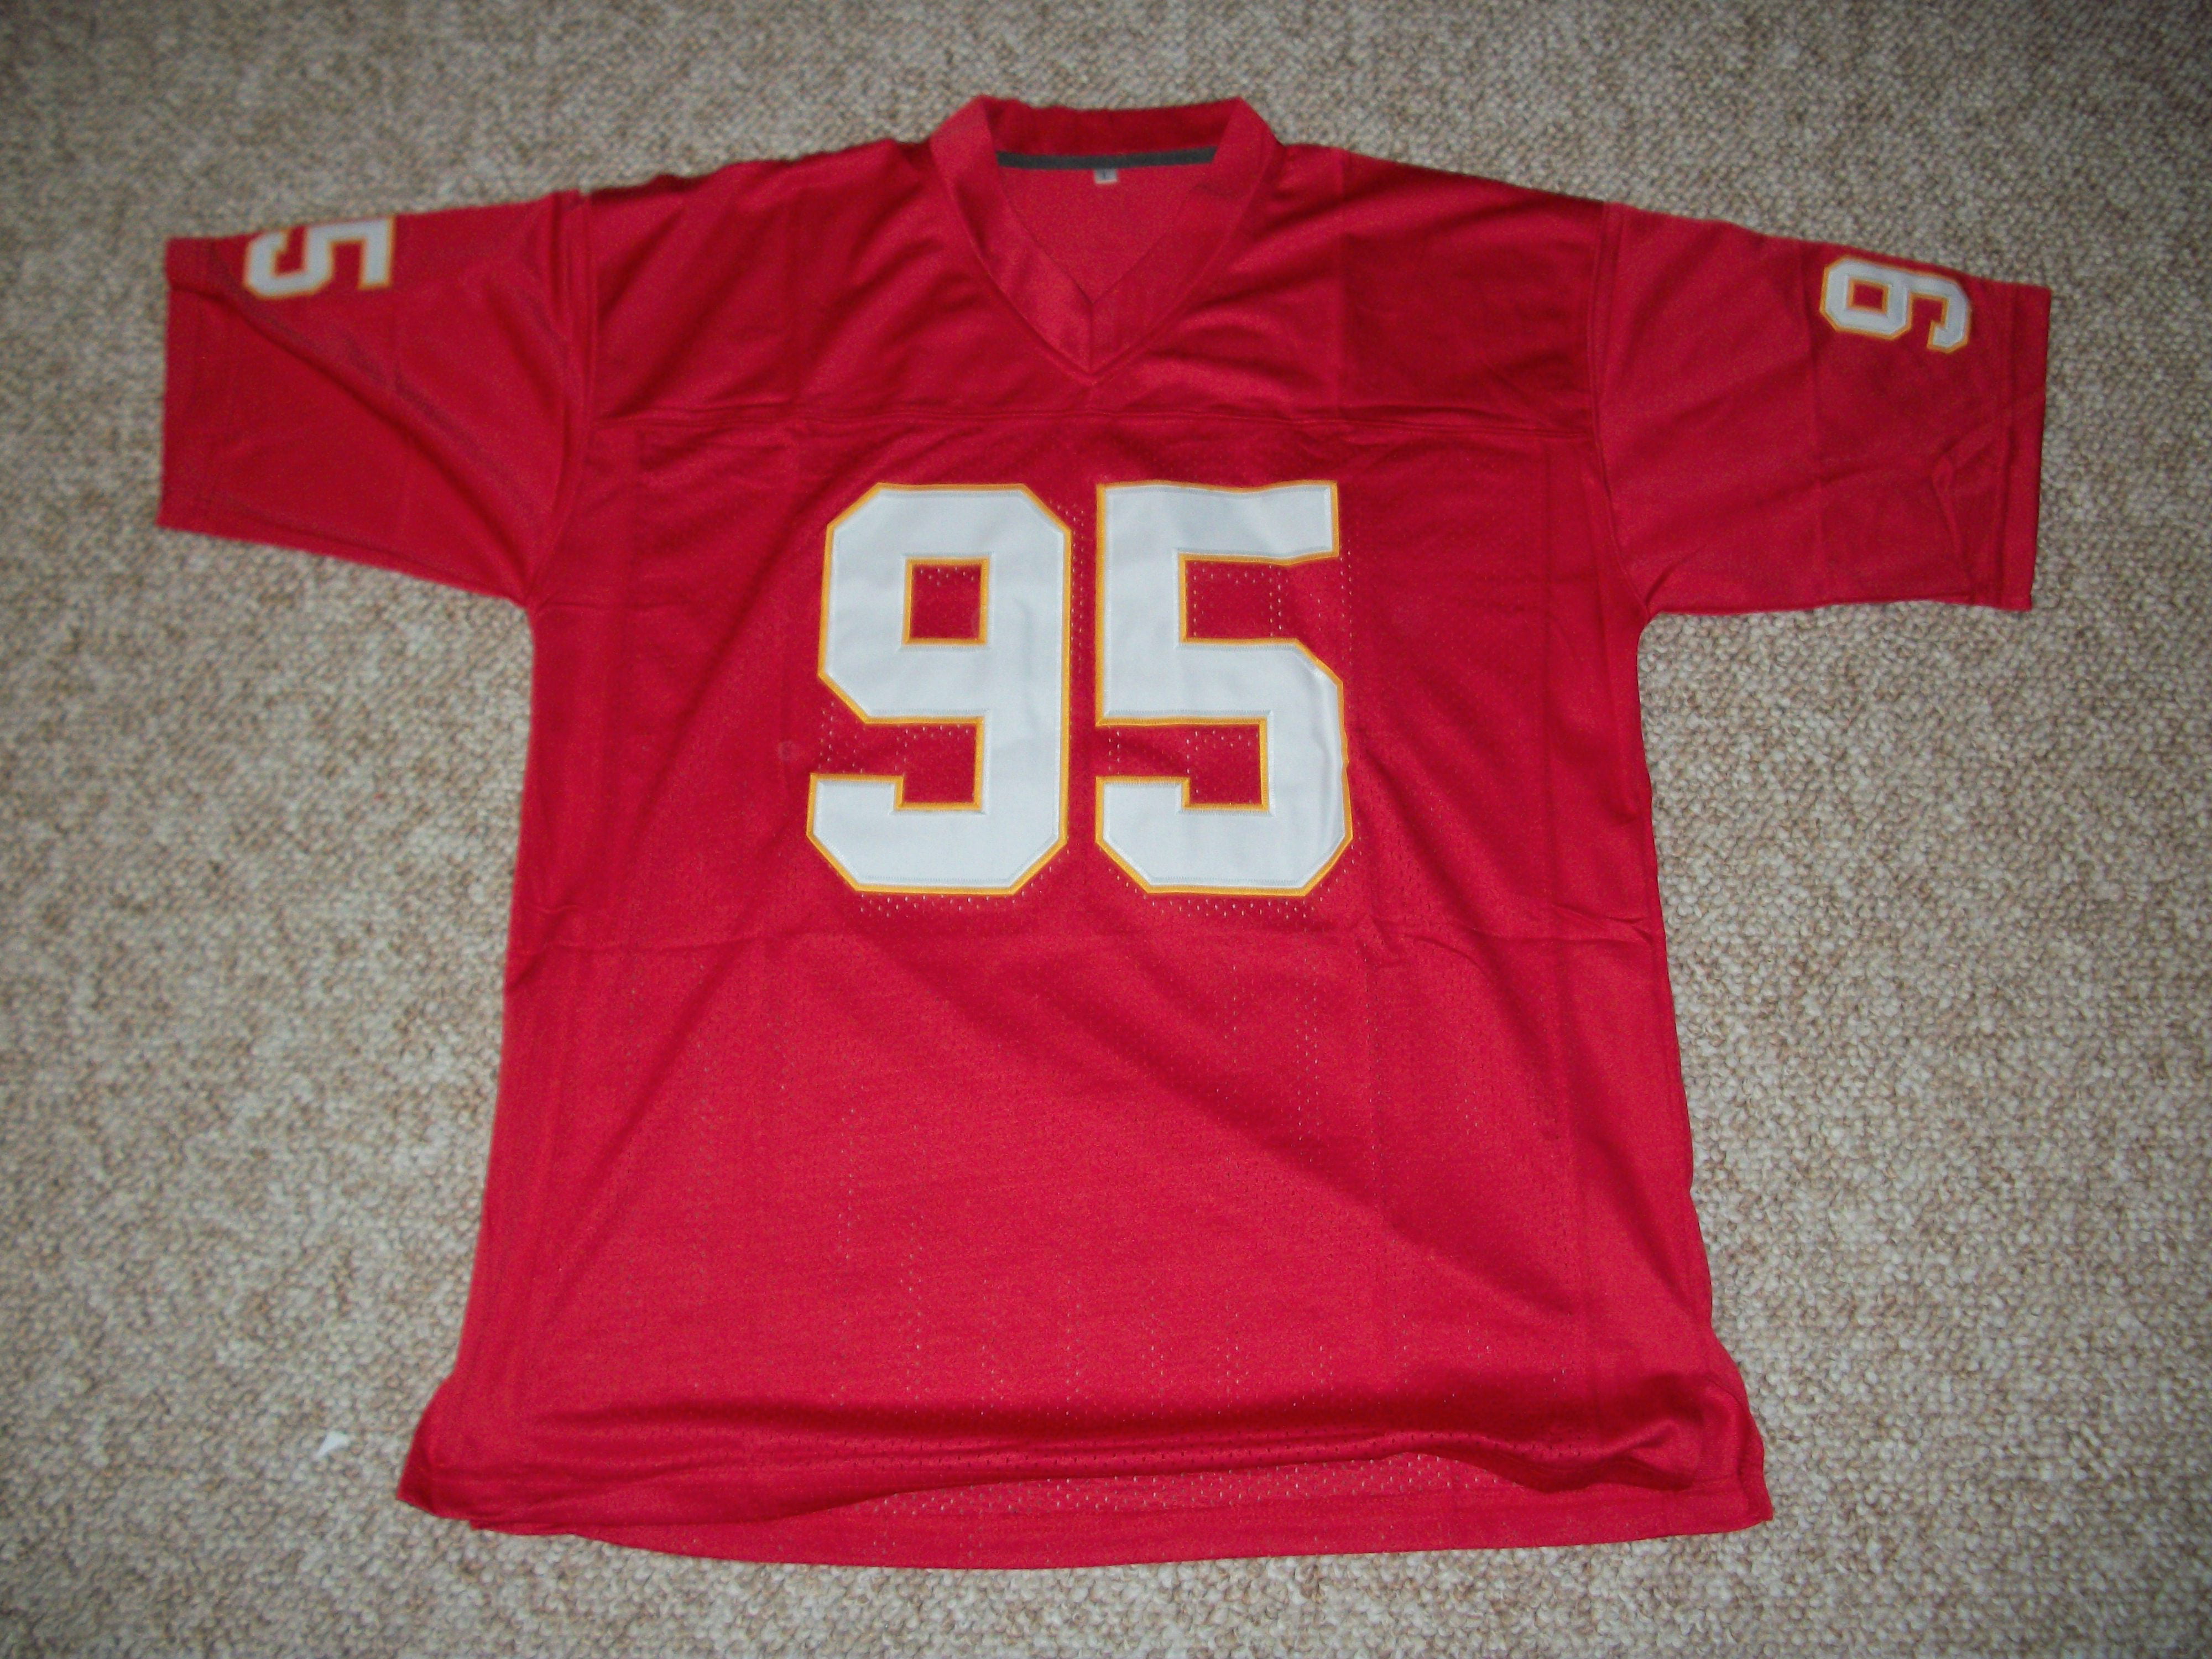 95 chiefs jersey